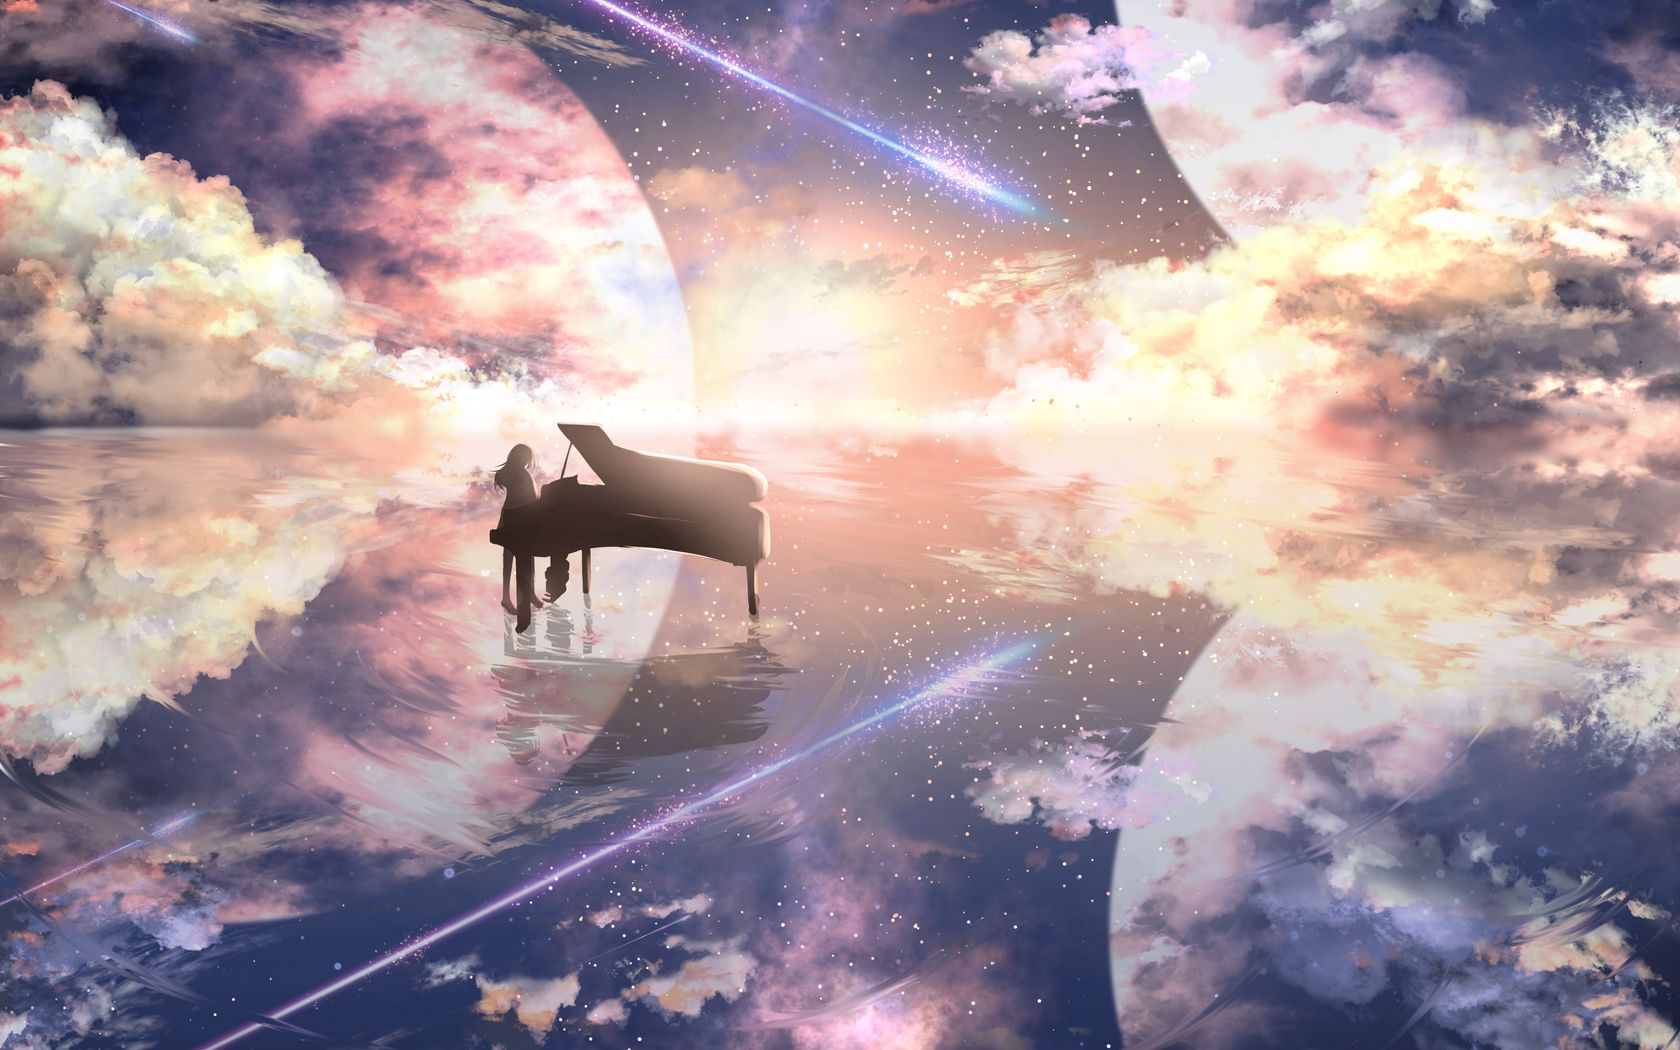 Download wallpaper 1680x1050 piano, silhouette, space, illusion, anime  widescreen 16:10 hd background